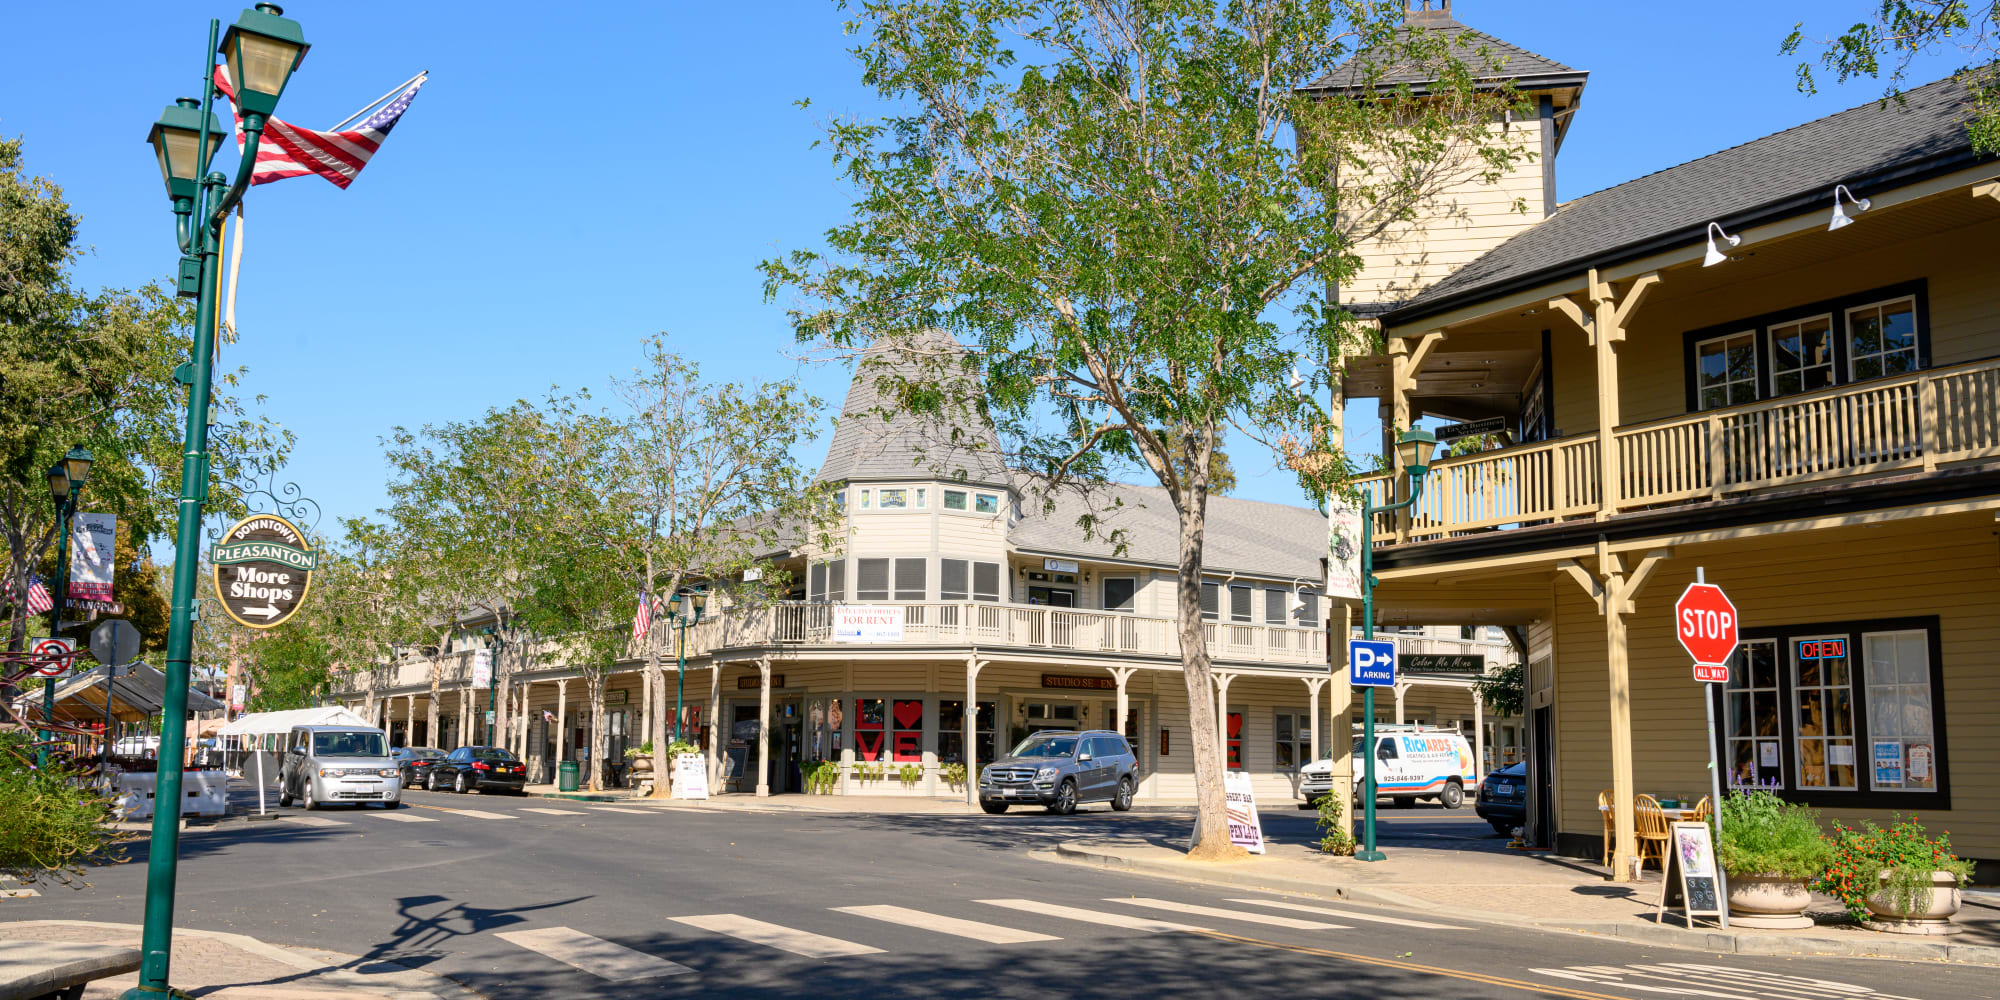 Experience the fantastic neighborhood near Pleasanton Heights in Pleasanton, California